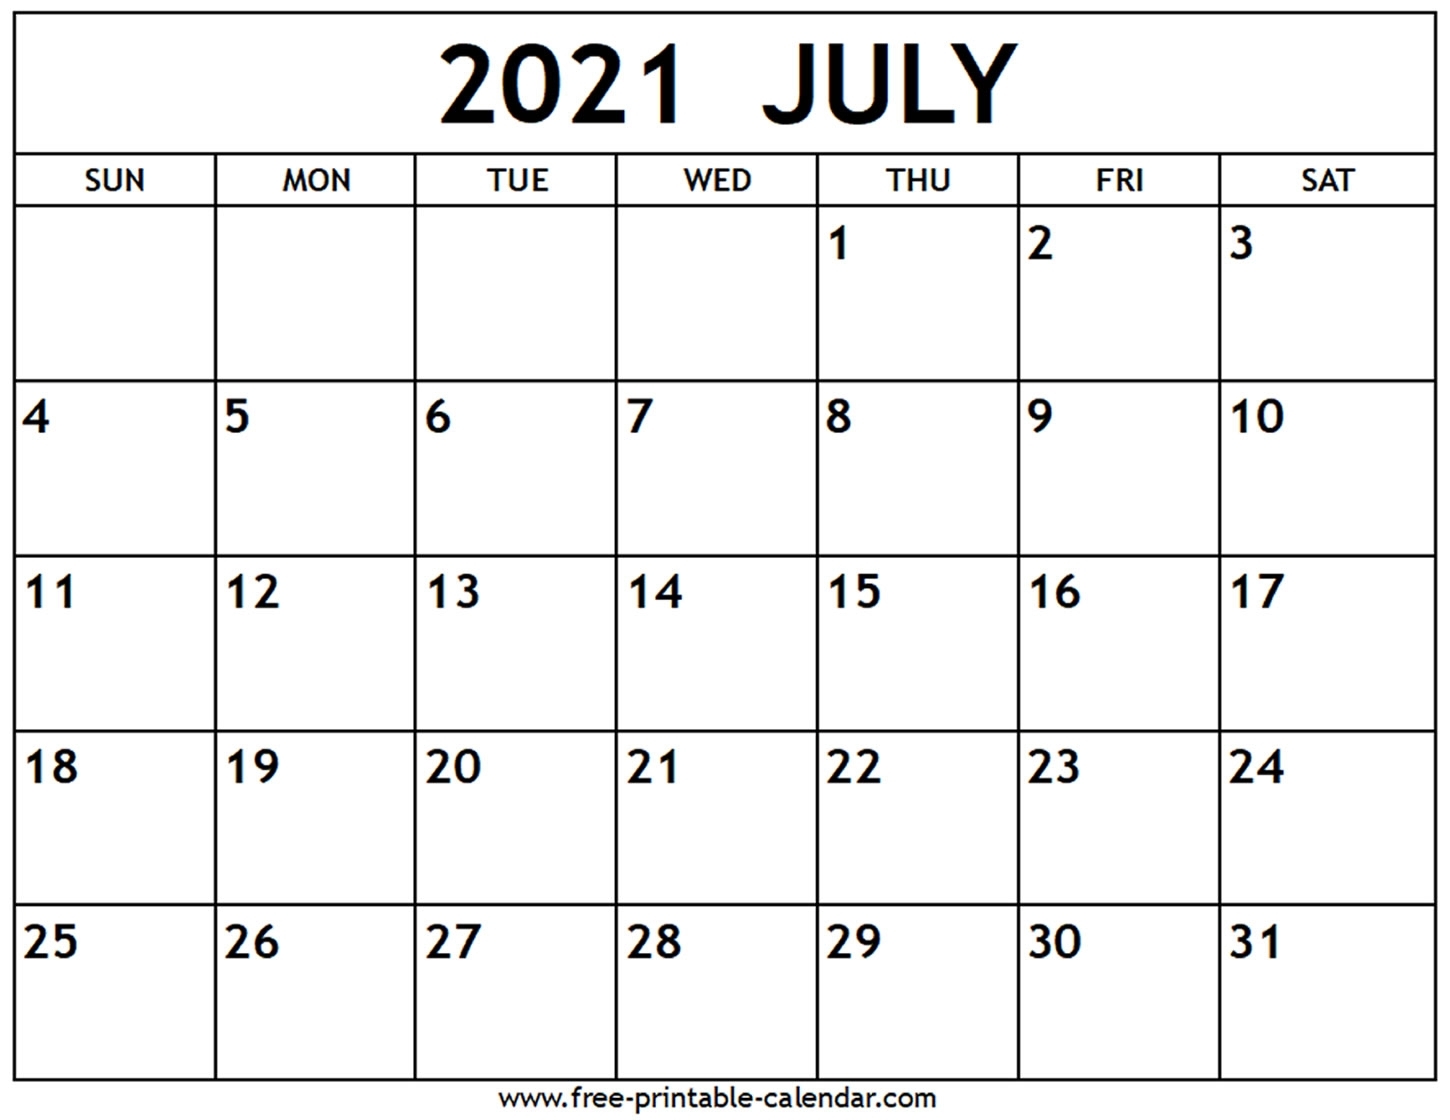 free-2021-printable-calendar-july-canada-monthly-month-calendar-printable